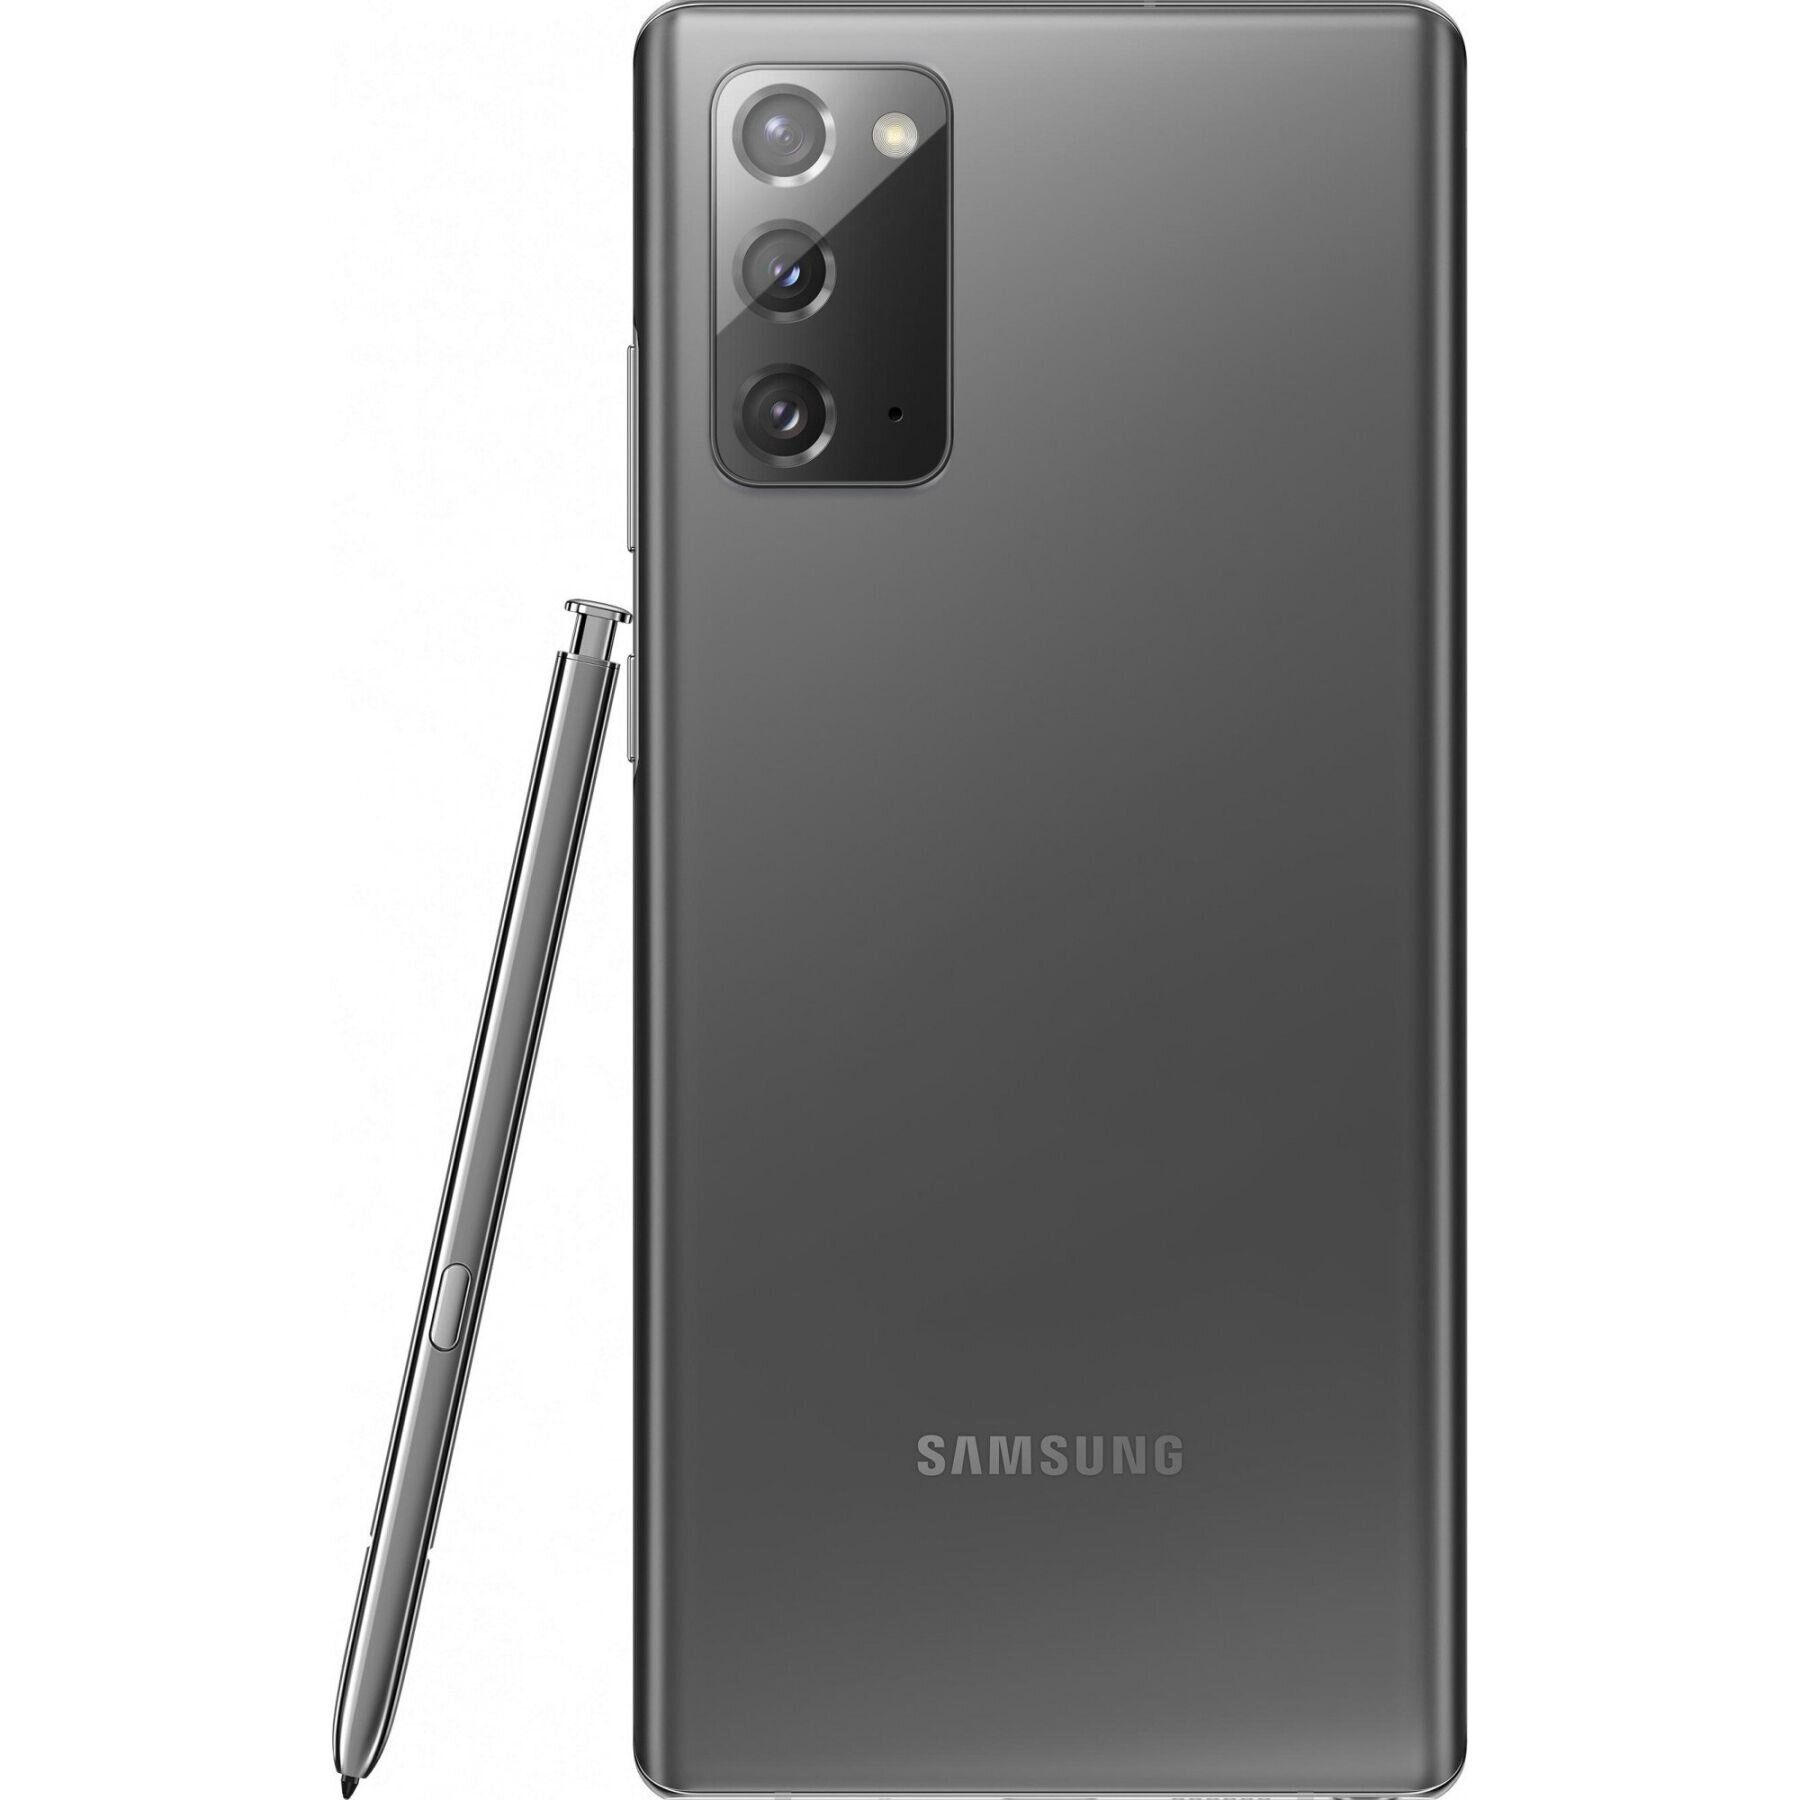 Samsung Galaxy Note20 5g Sm N981b 8256gb Mystic Gray Iboxkievua